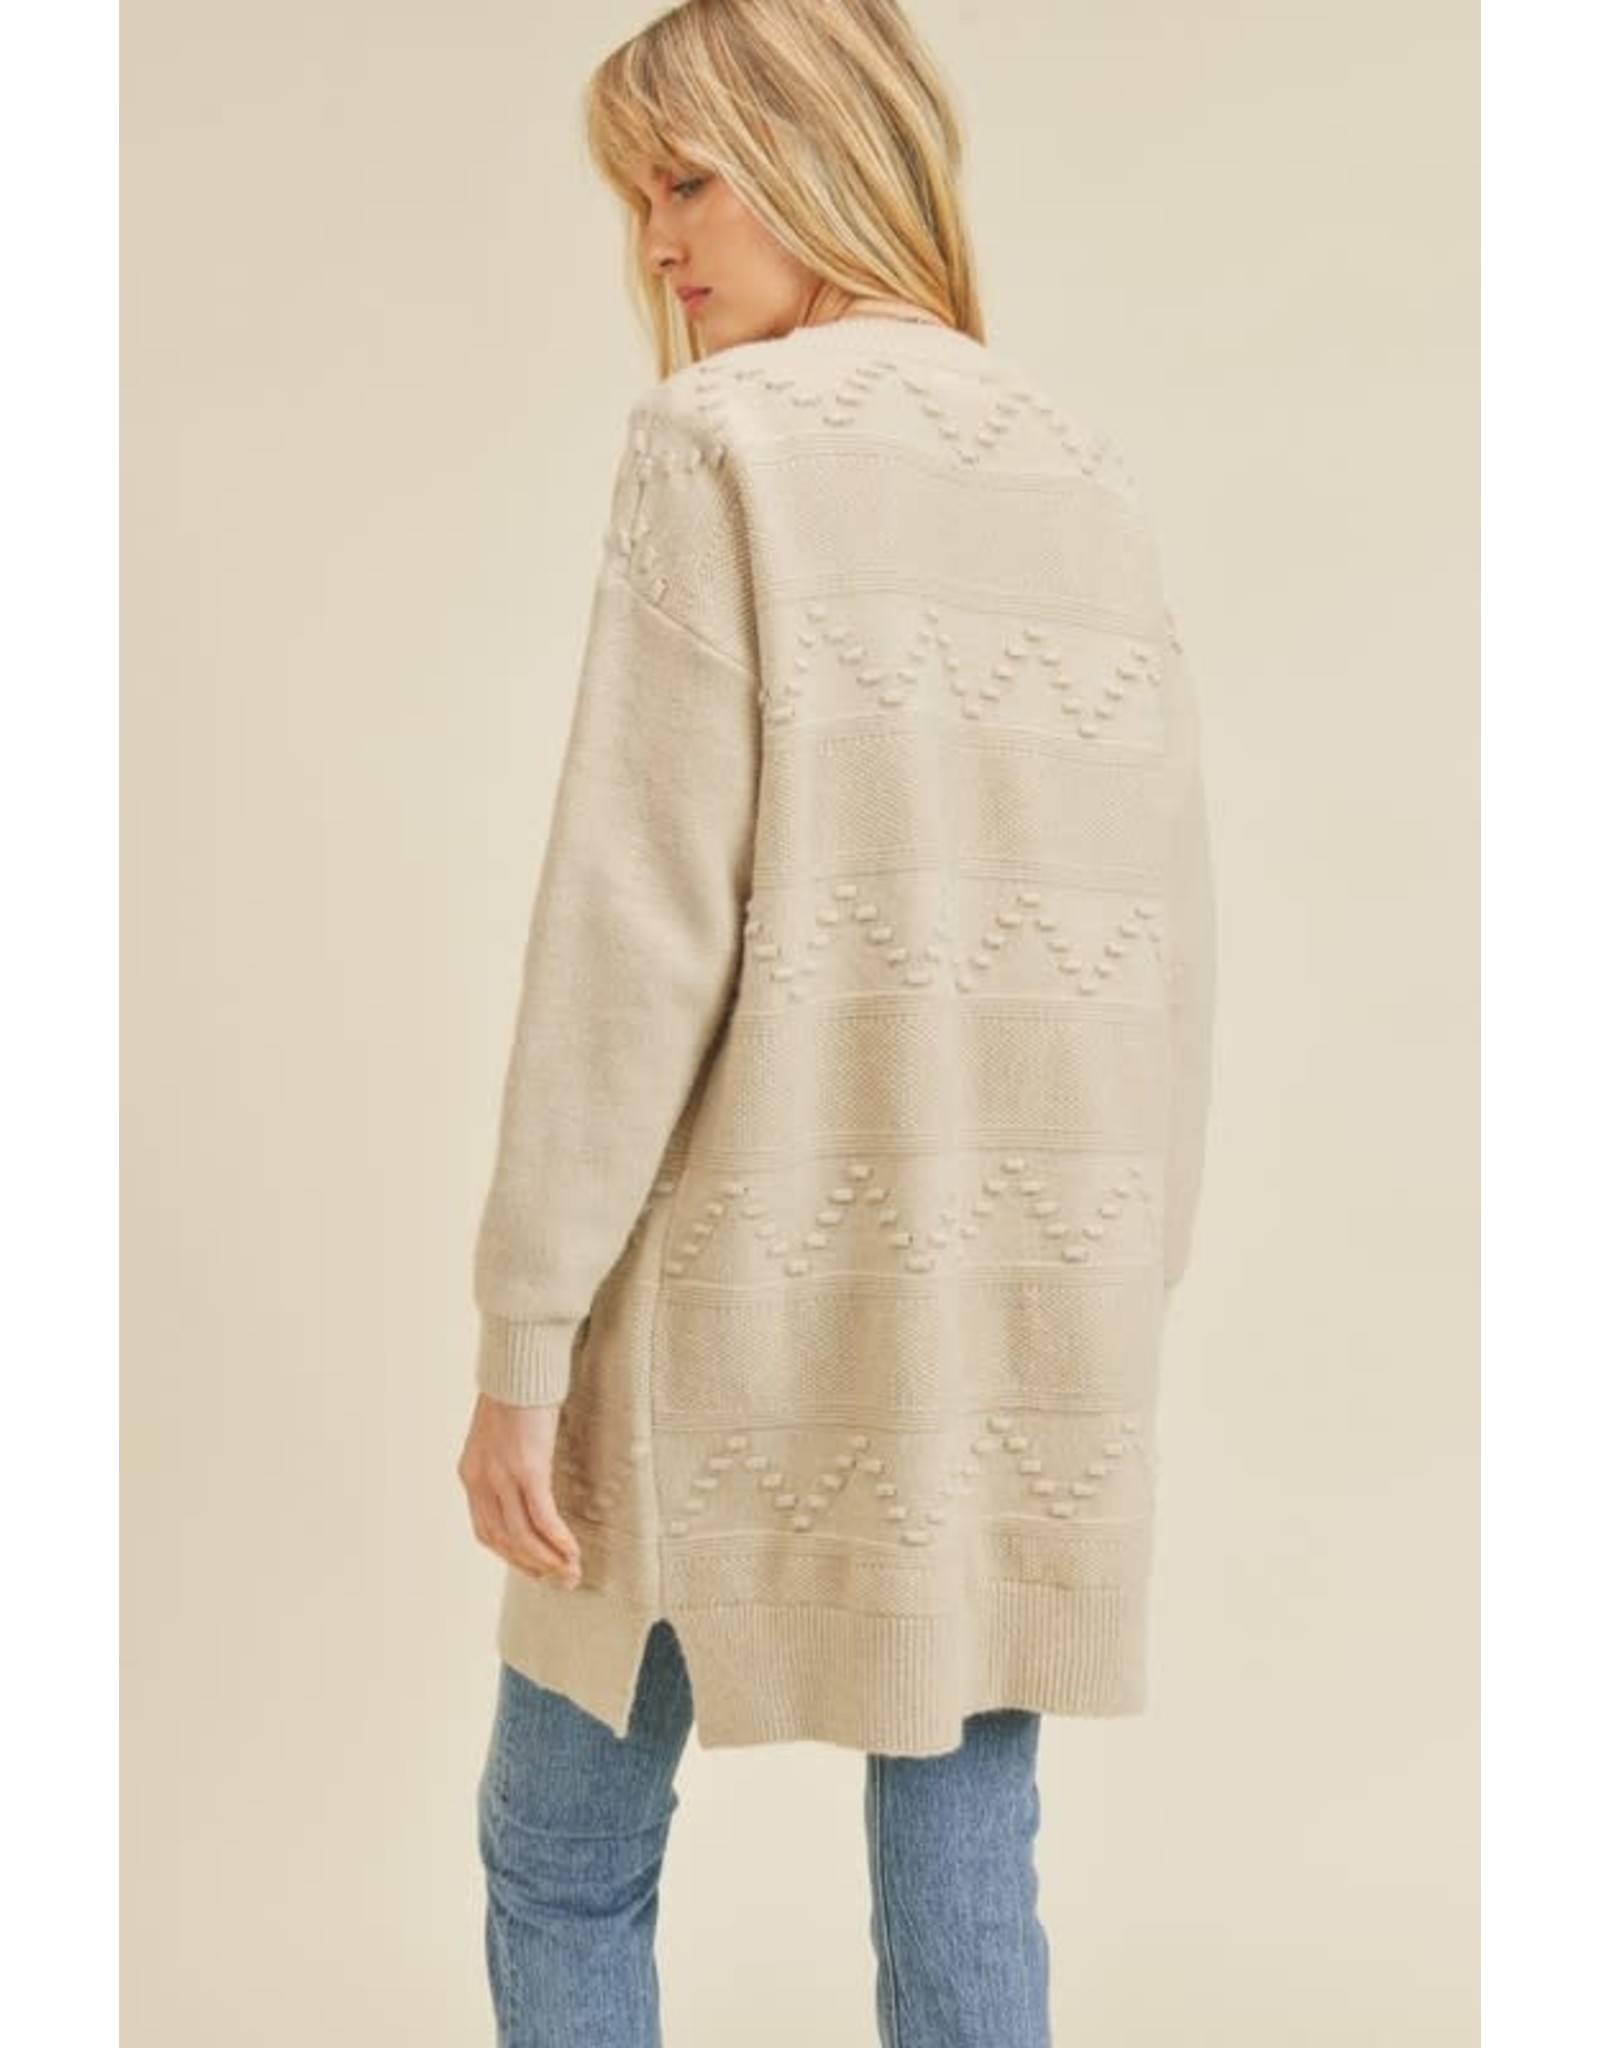 Biscuit Label - Desert Sweater Coat